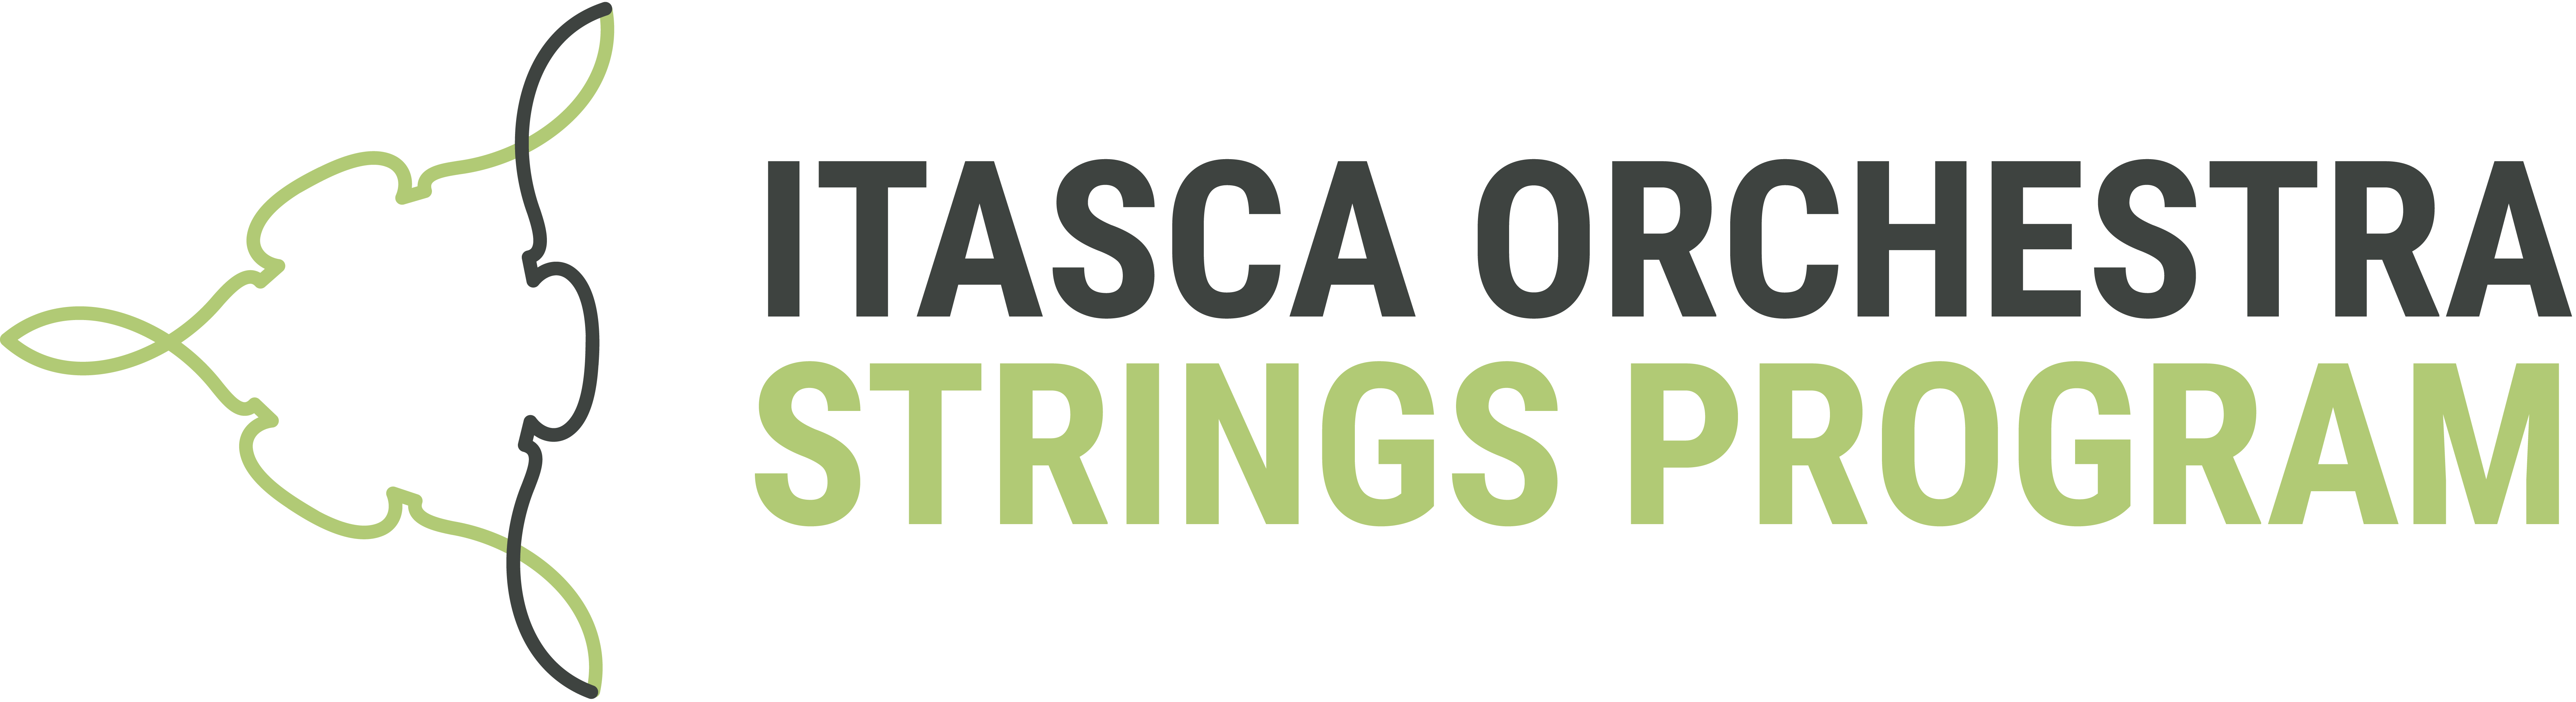 Itasca Orchestra & Strings Program logo